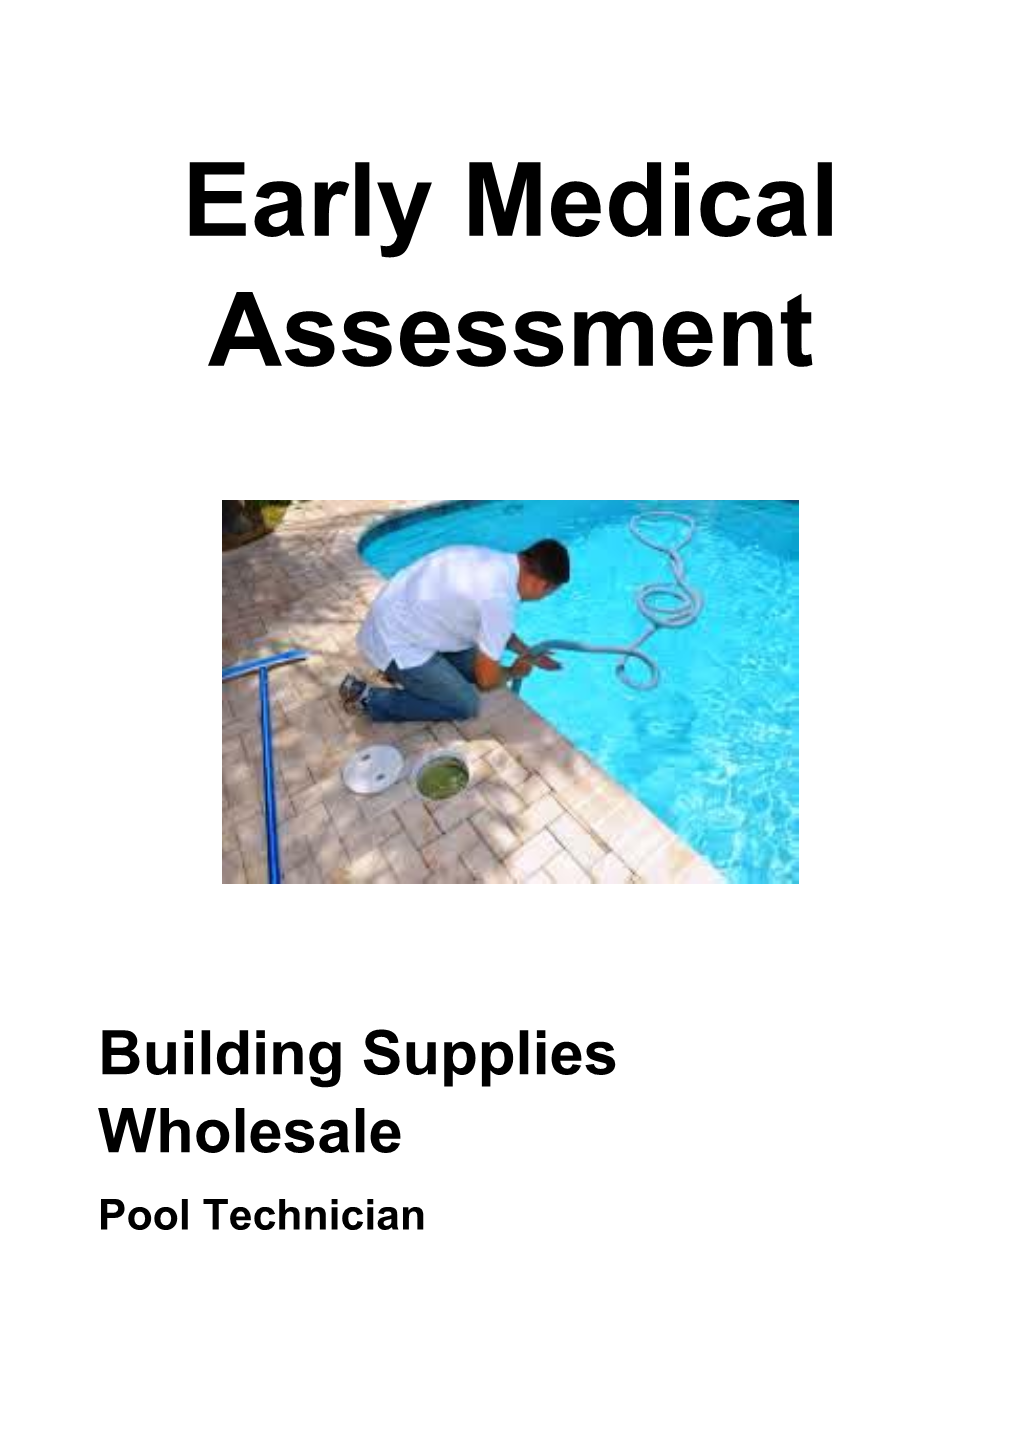 Building Supplies Wholesale - Pool Technician